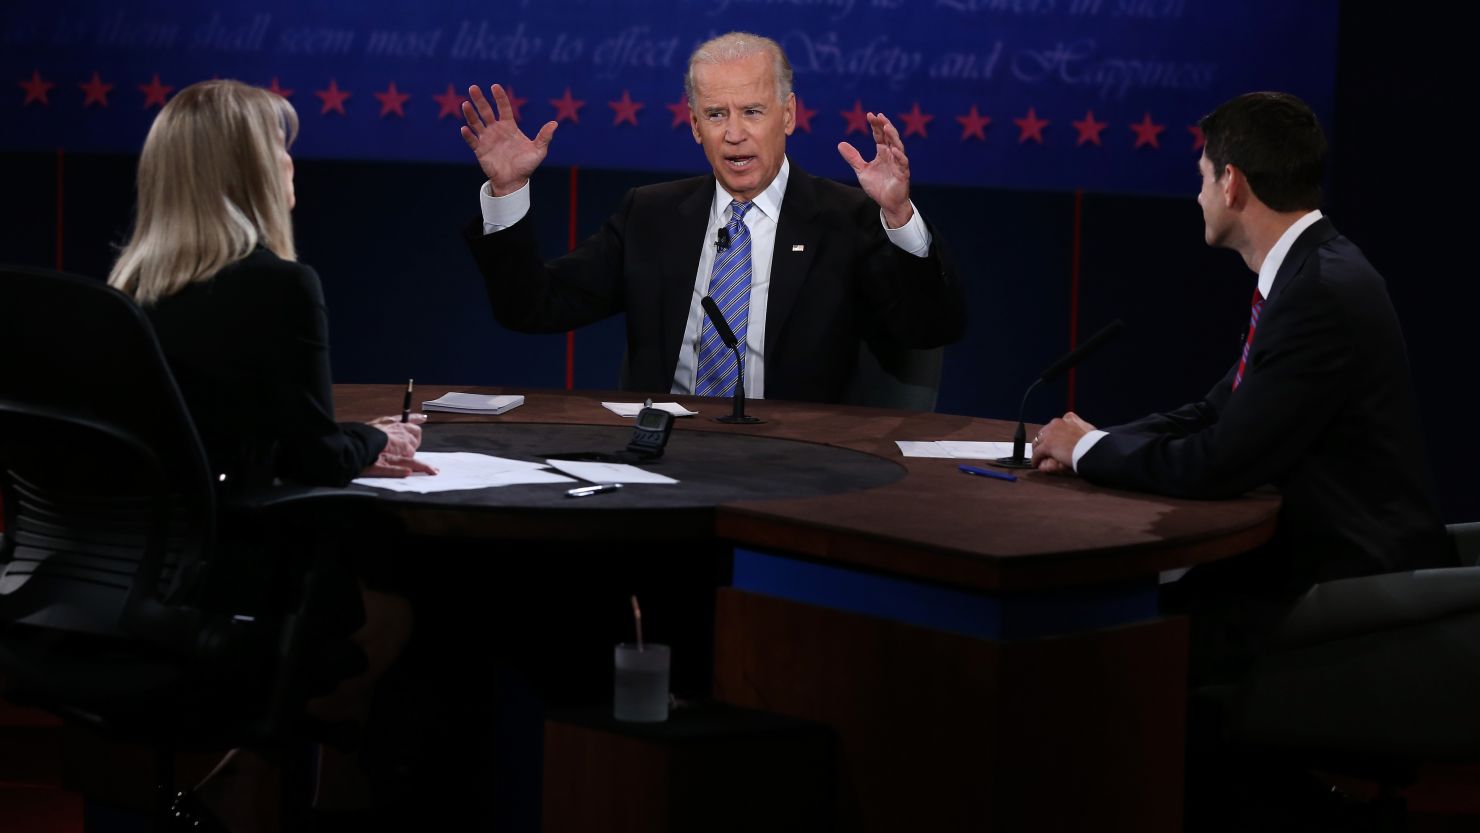 Joe Biden dominated the vice presidential debate, even when wound up, says debate coach Todd Graham.